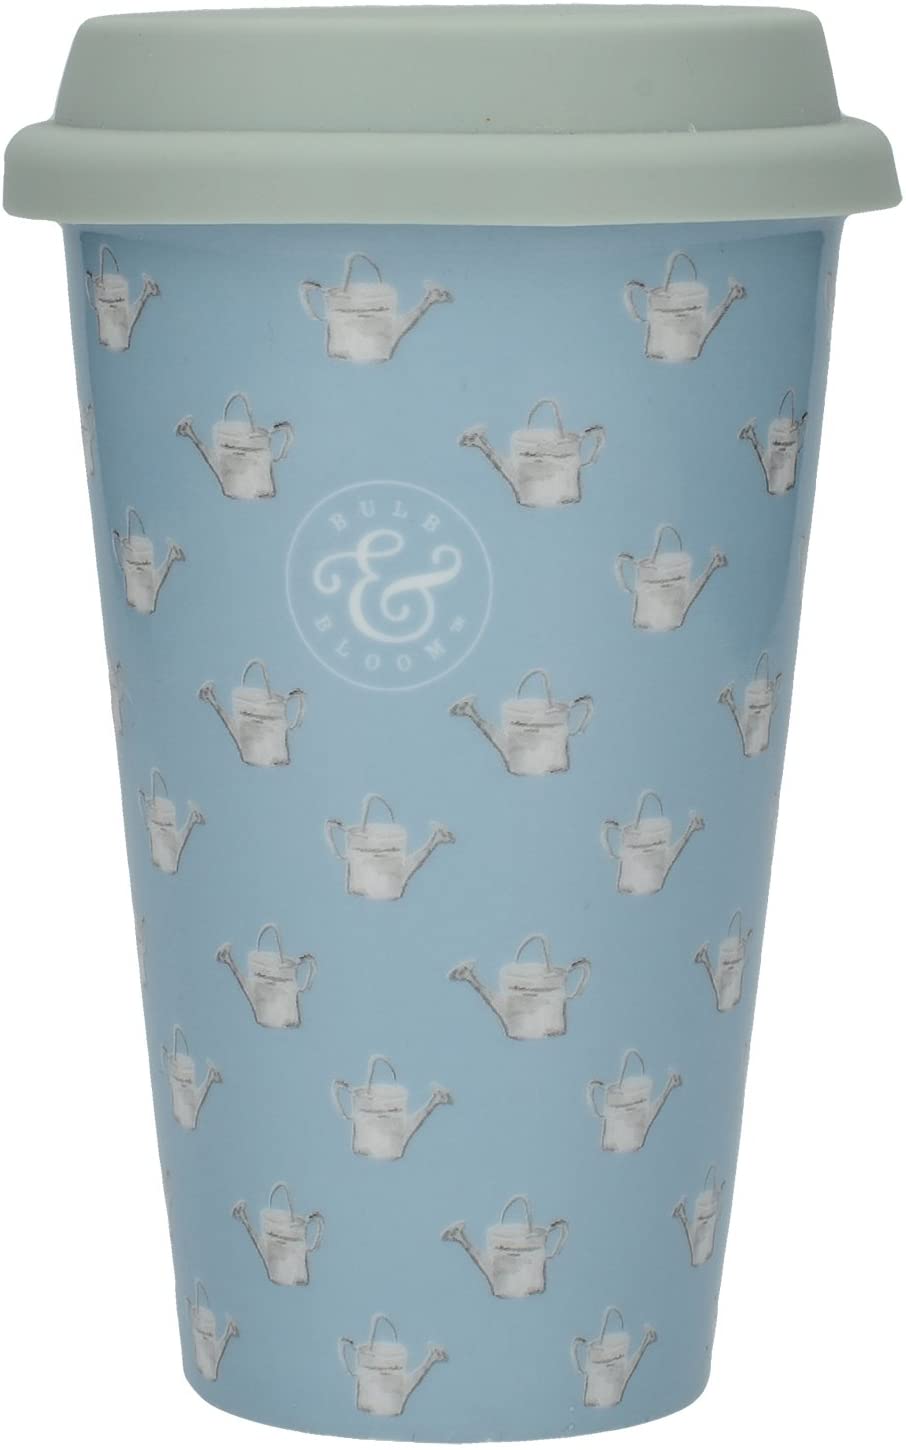 Creative Tops Curiosities Insulated Eco Travel Mug, Porcelain, Blue, 10 x 10 x 15 cm